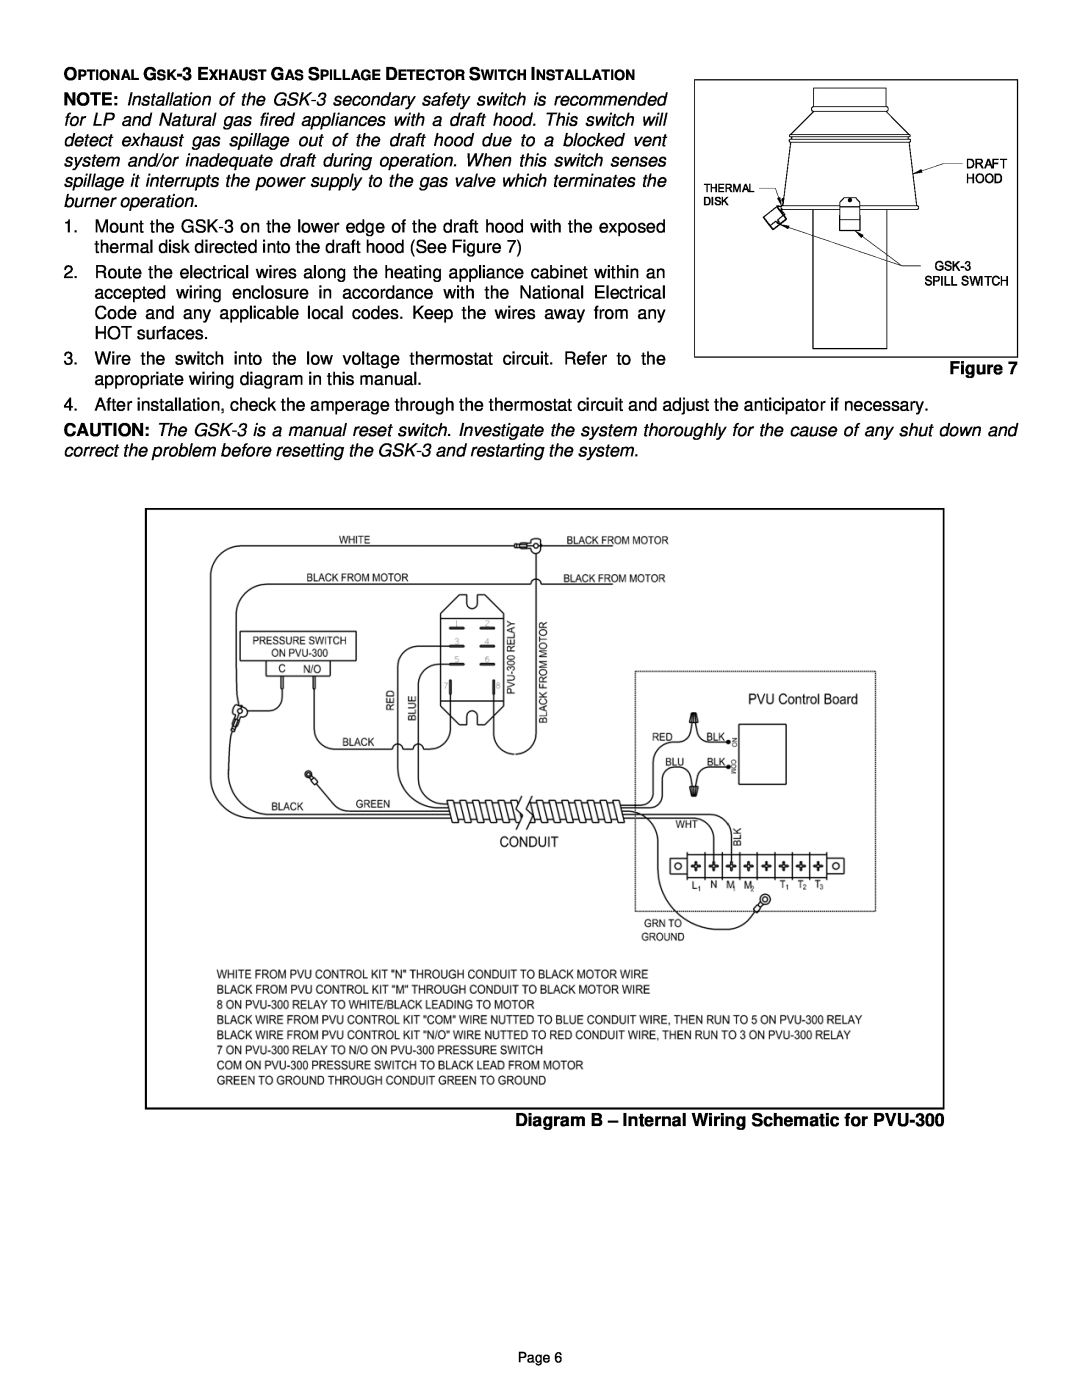 Field Controls installation instructions Diagram B - Internal Wiring Schematic for PVU-300 